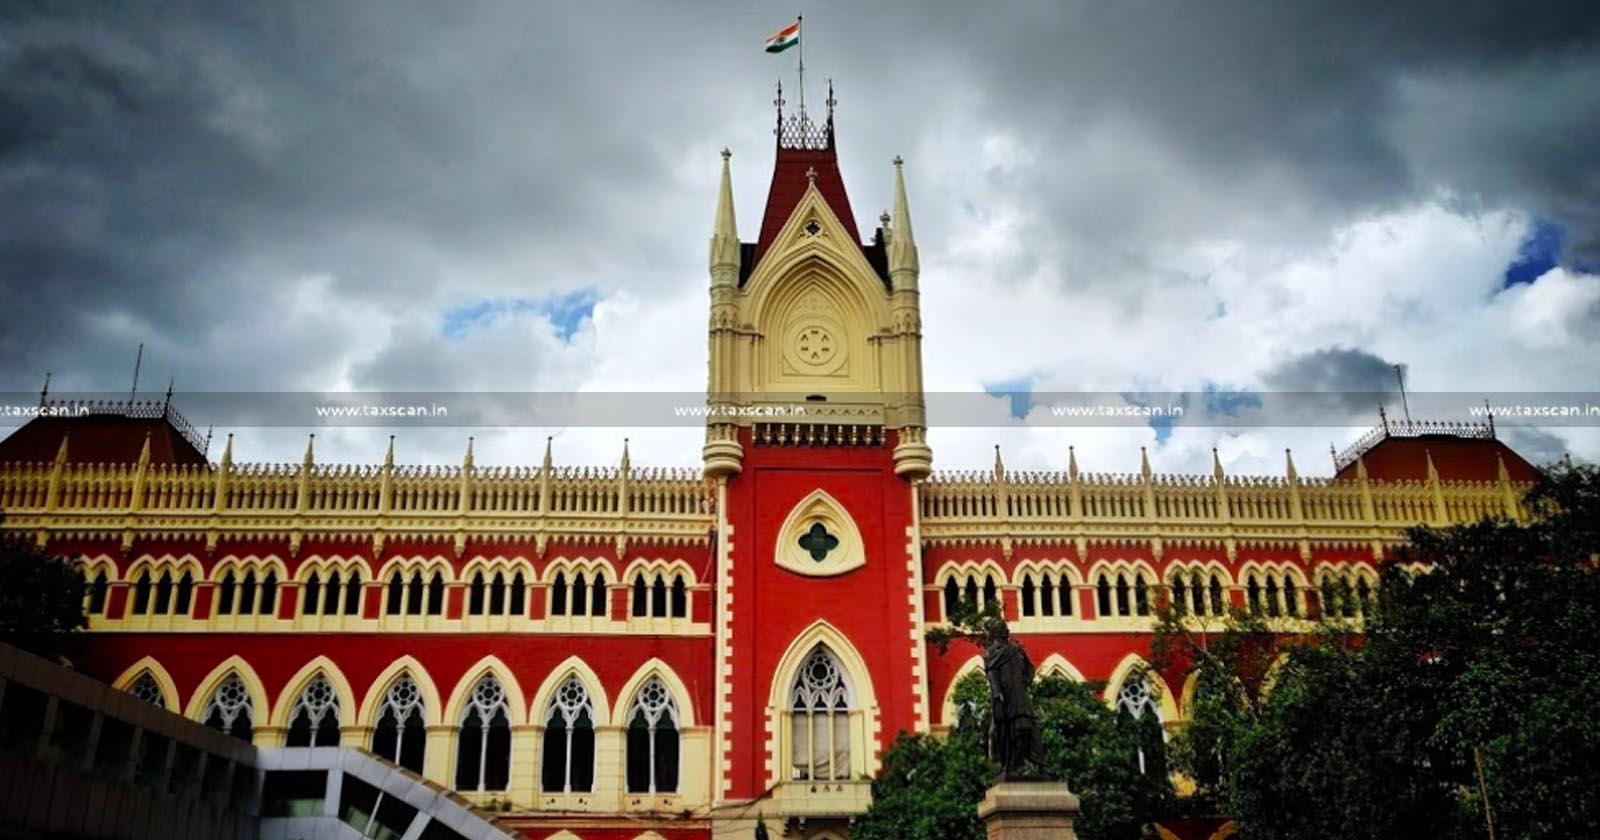 Calcutta High Court - PCIT - immaterial - Irrelevant - Taxscan